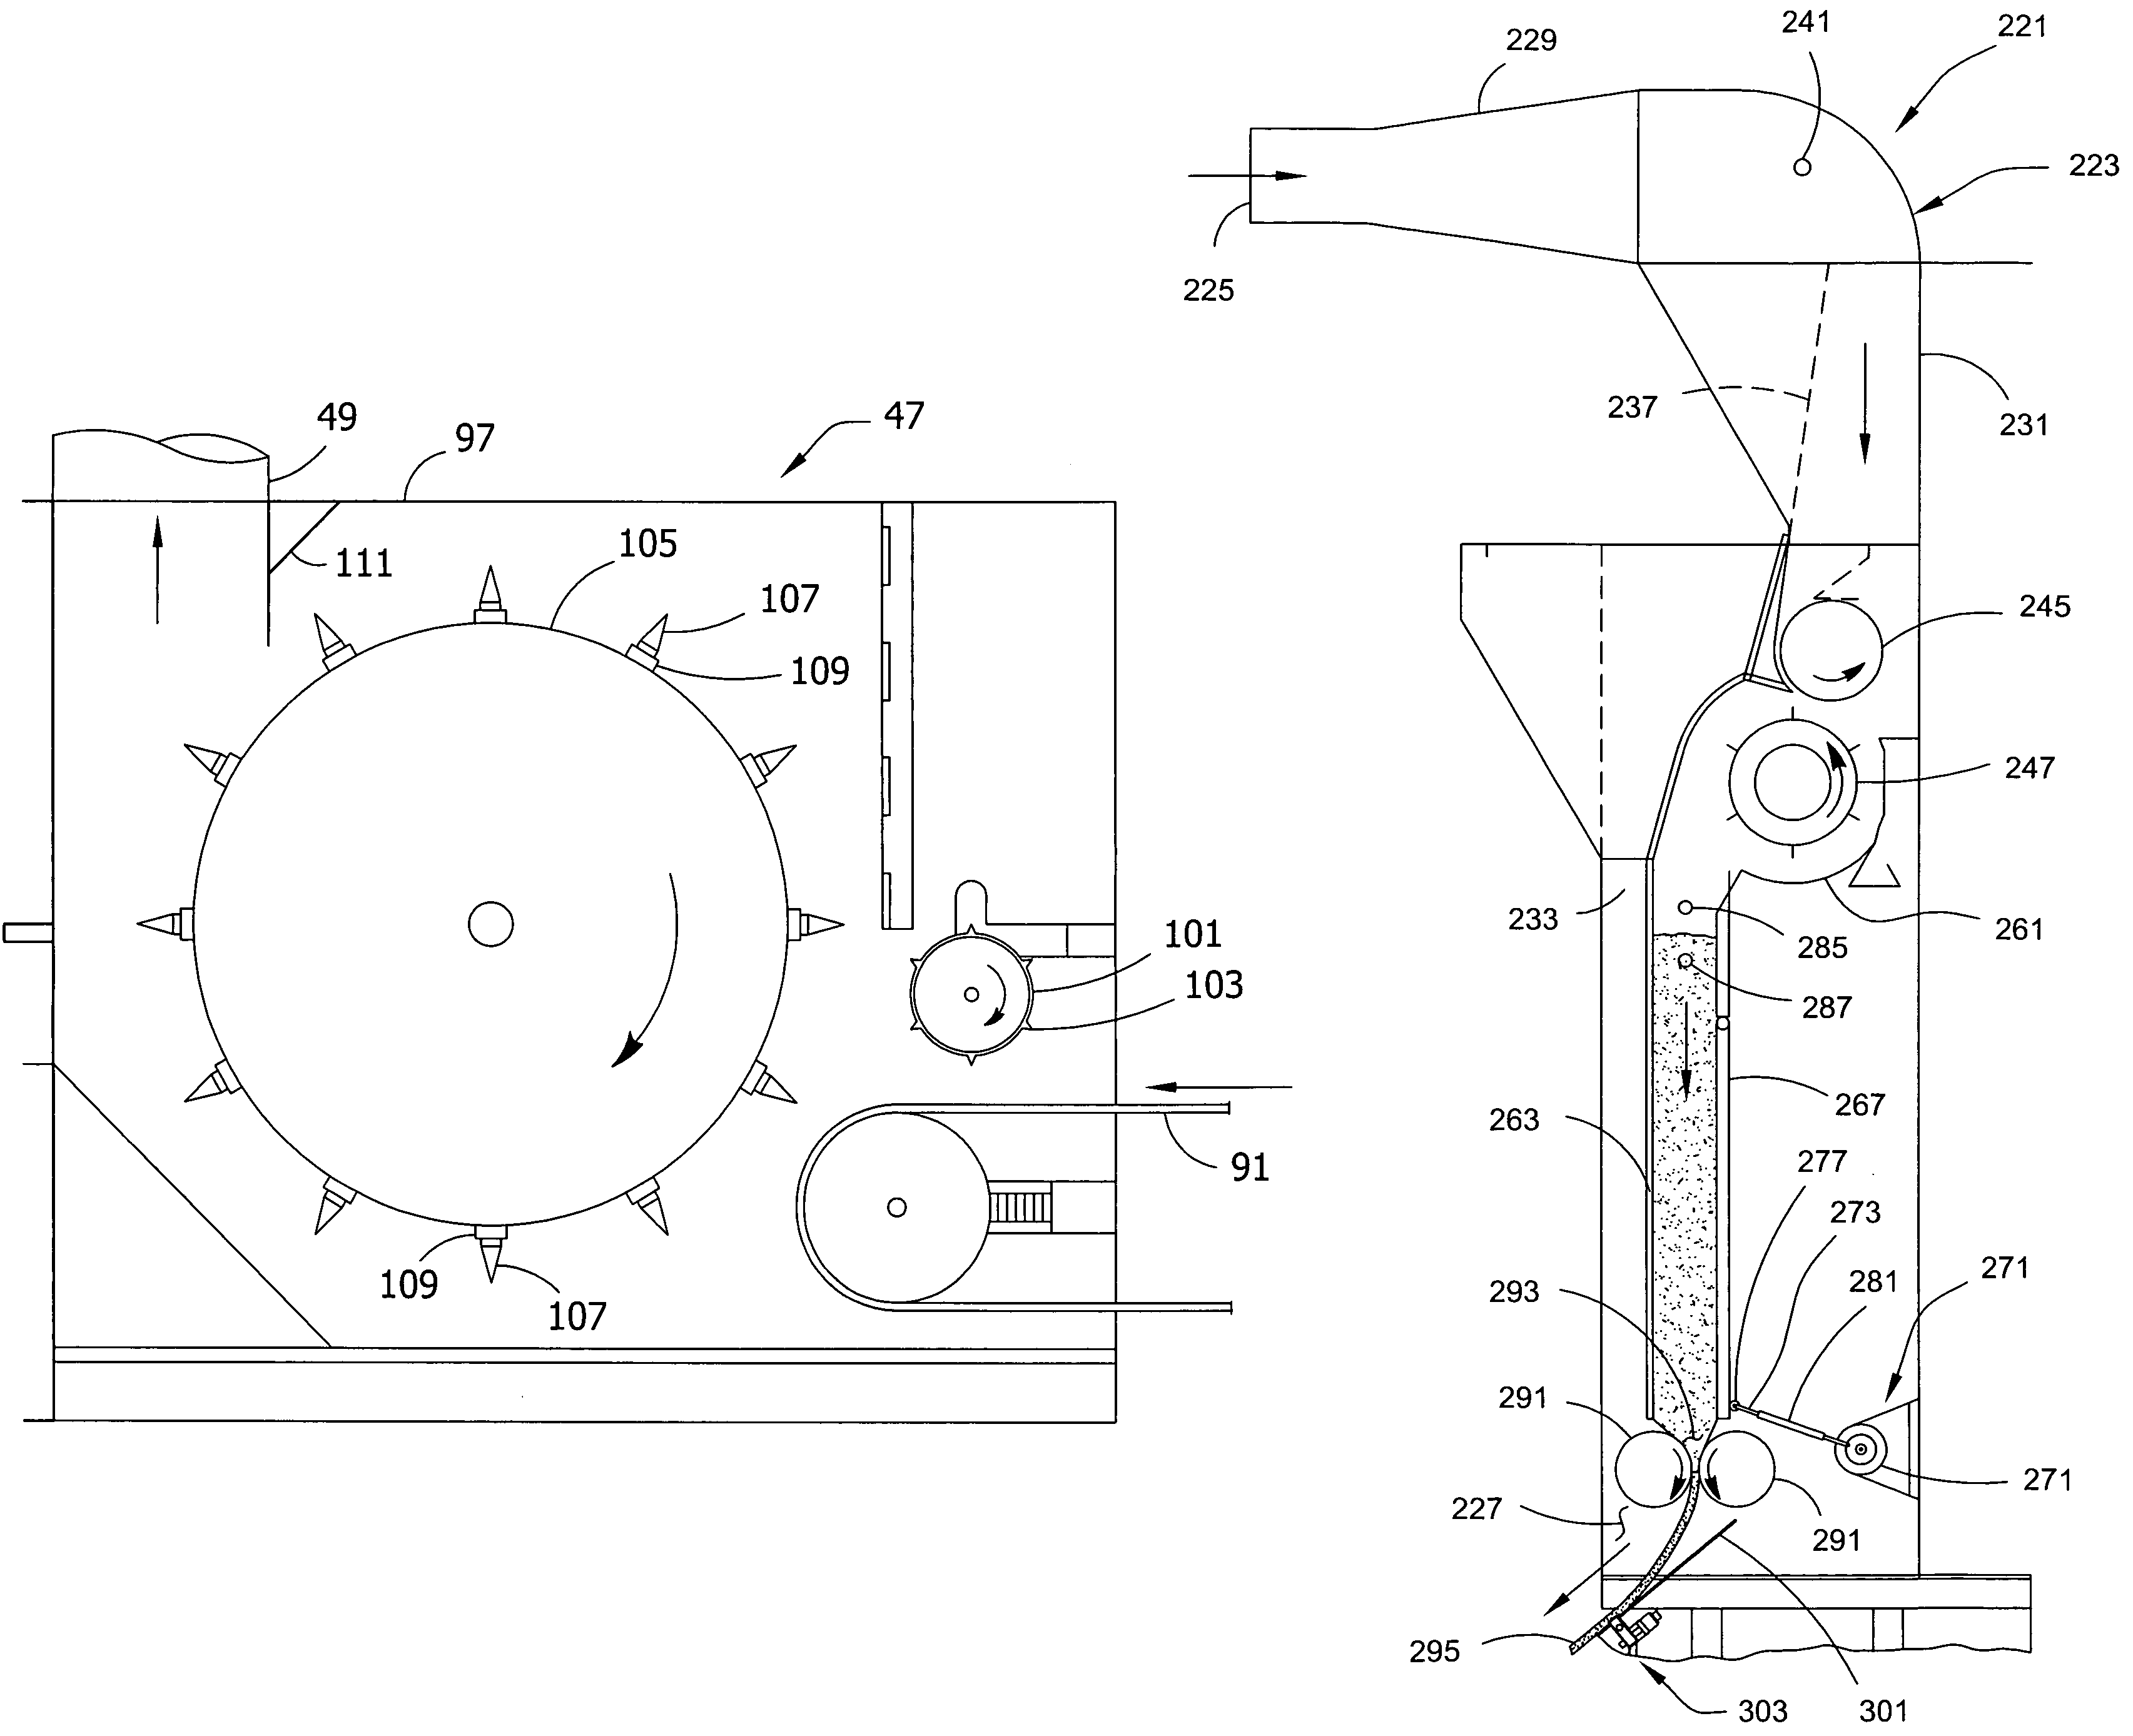 Fiber blending apparatus and method